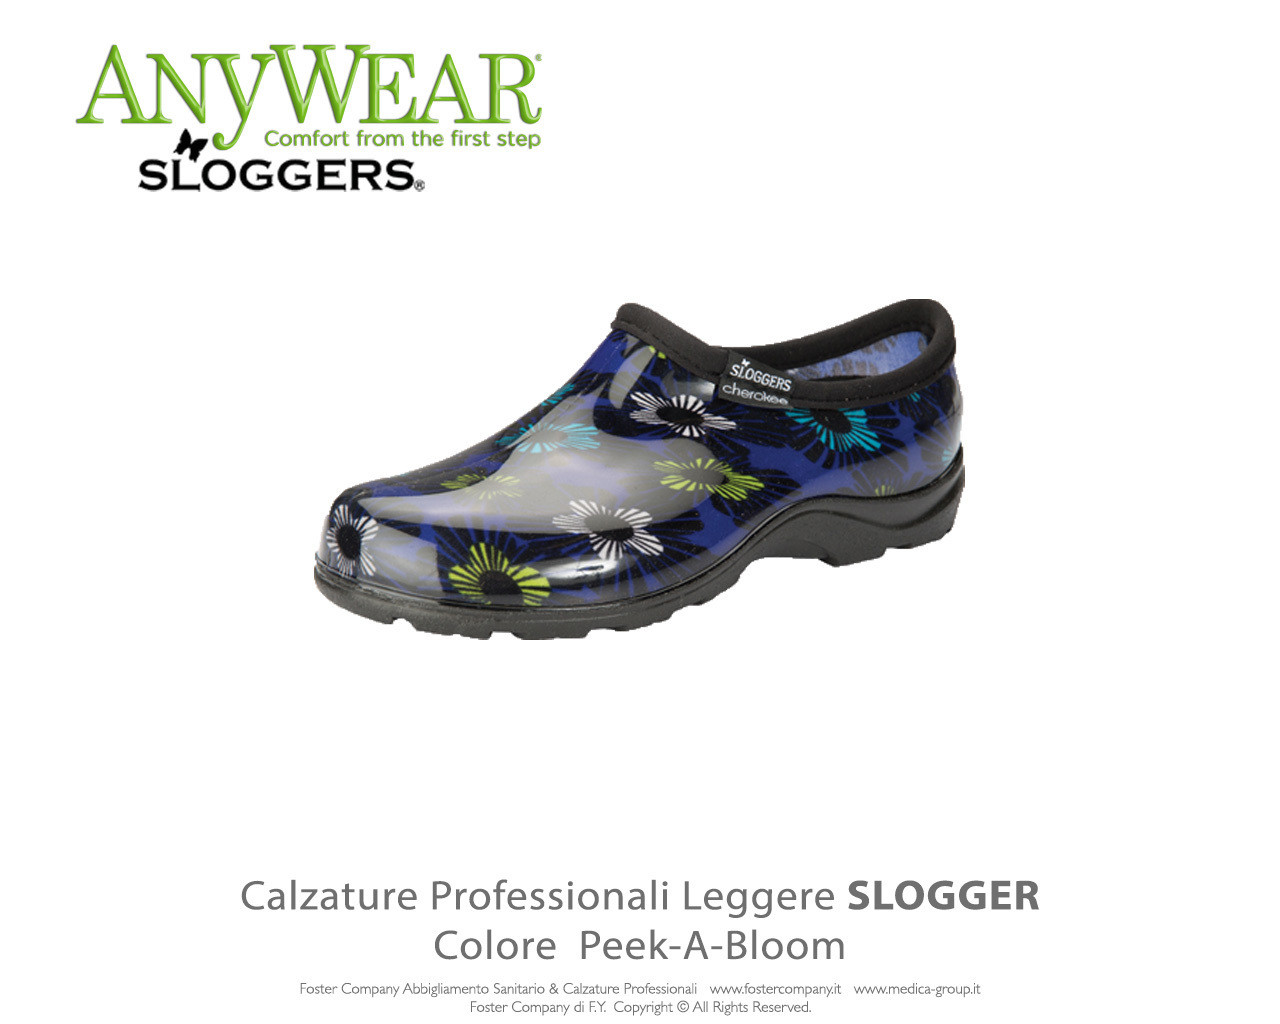 Calzature Professionali Anywear SLOGGER Colore Peek-A-Bloom -  FINE SERIE